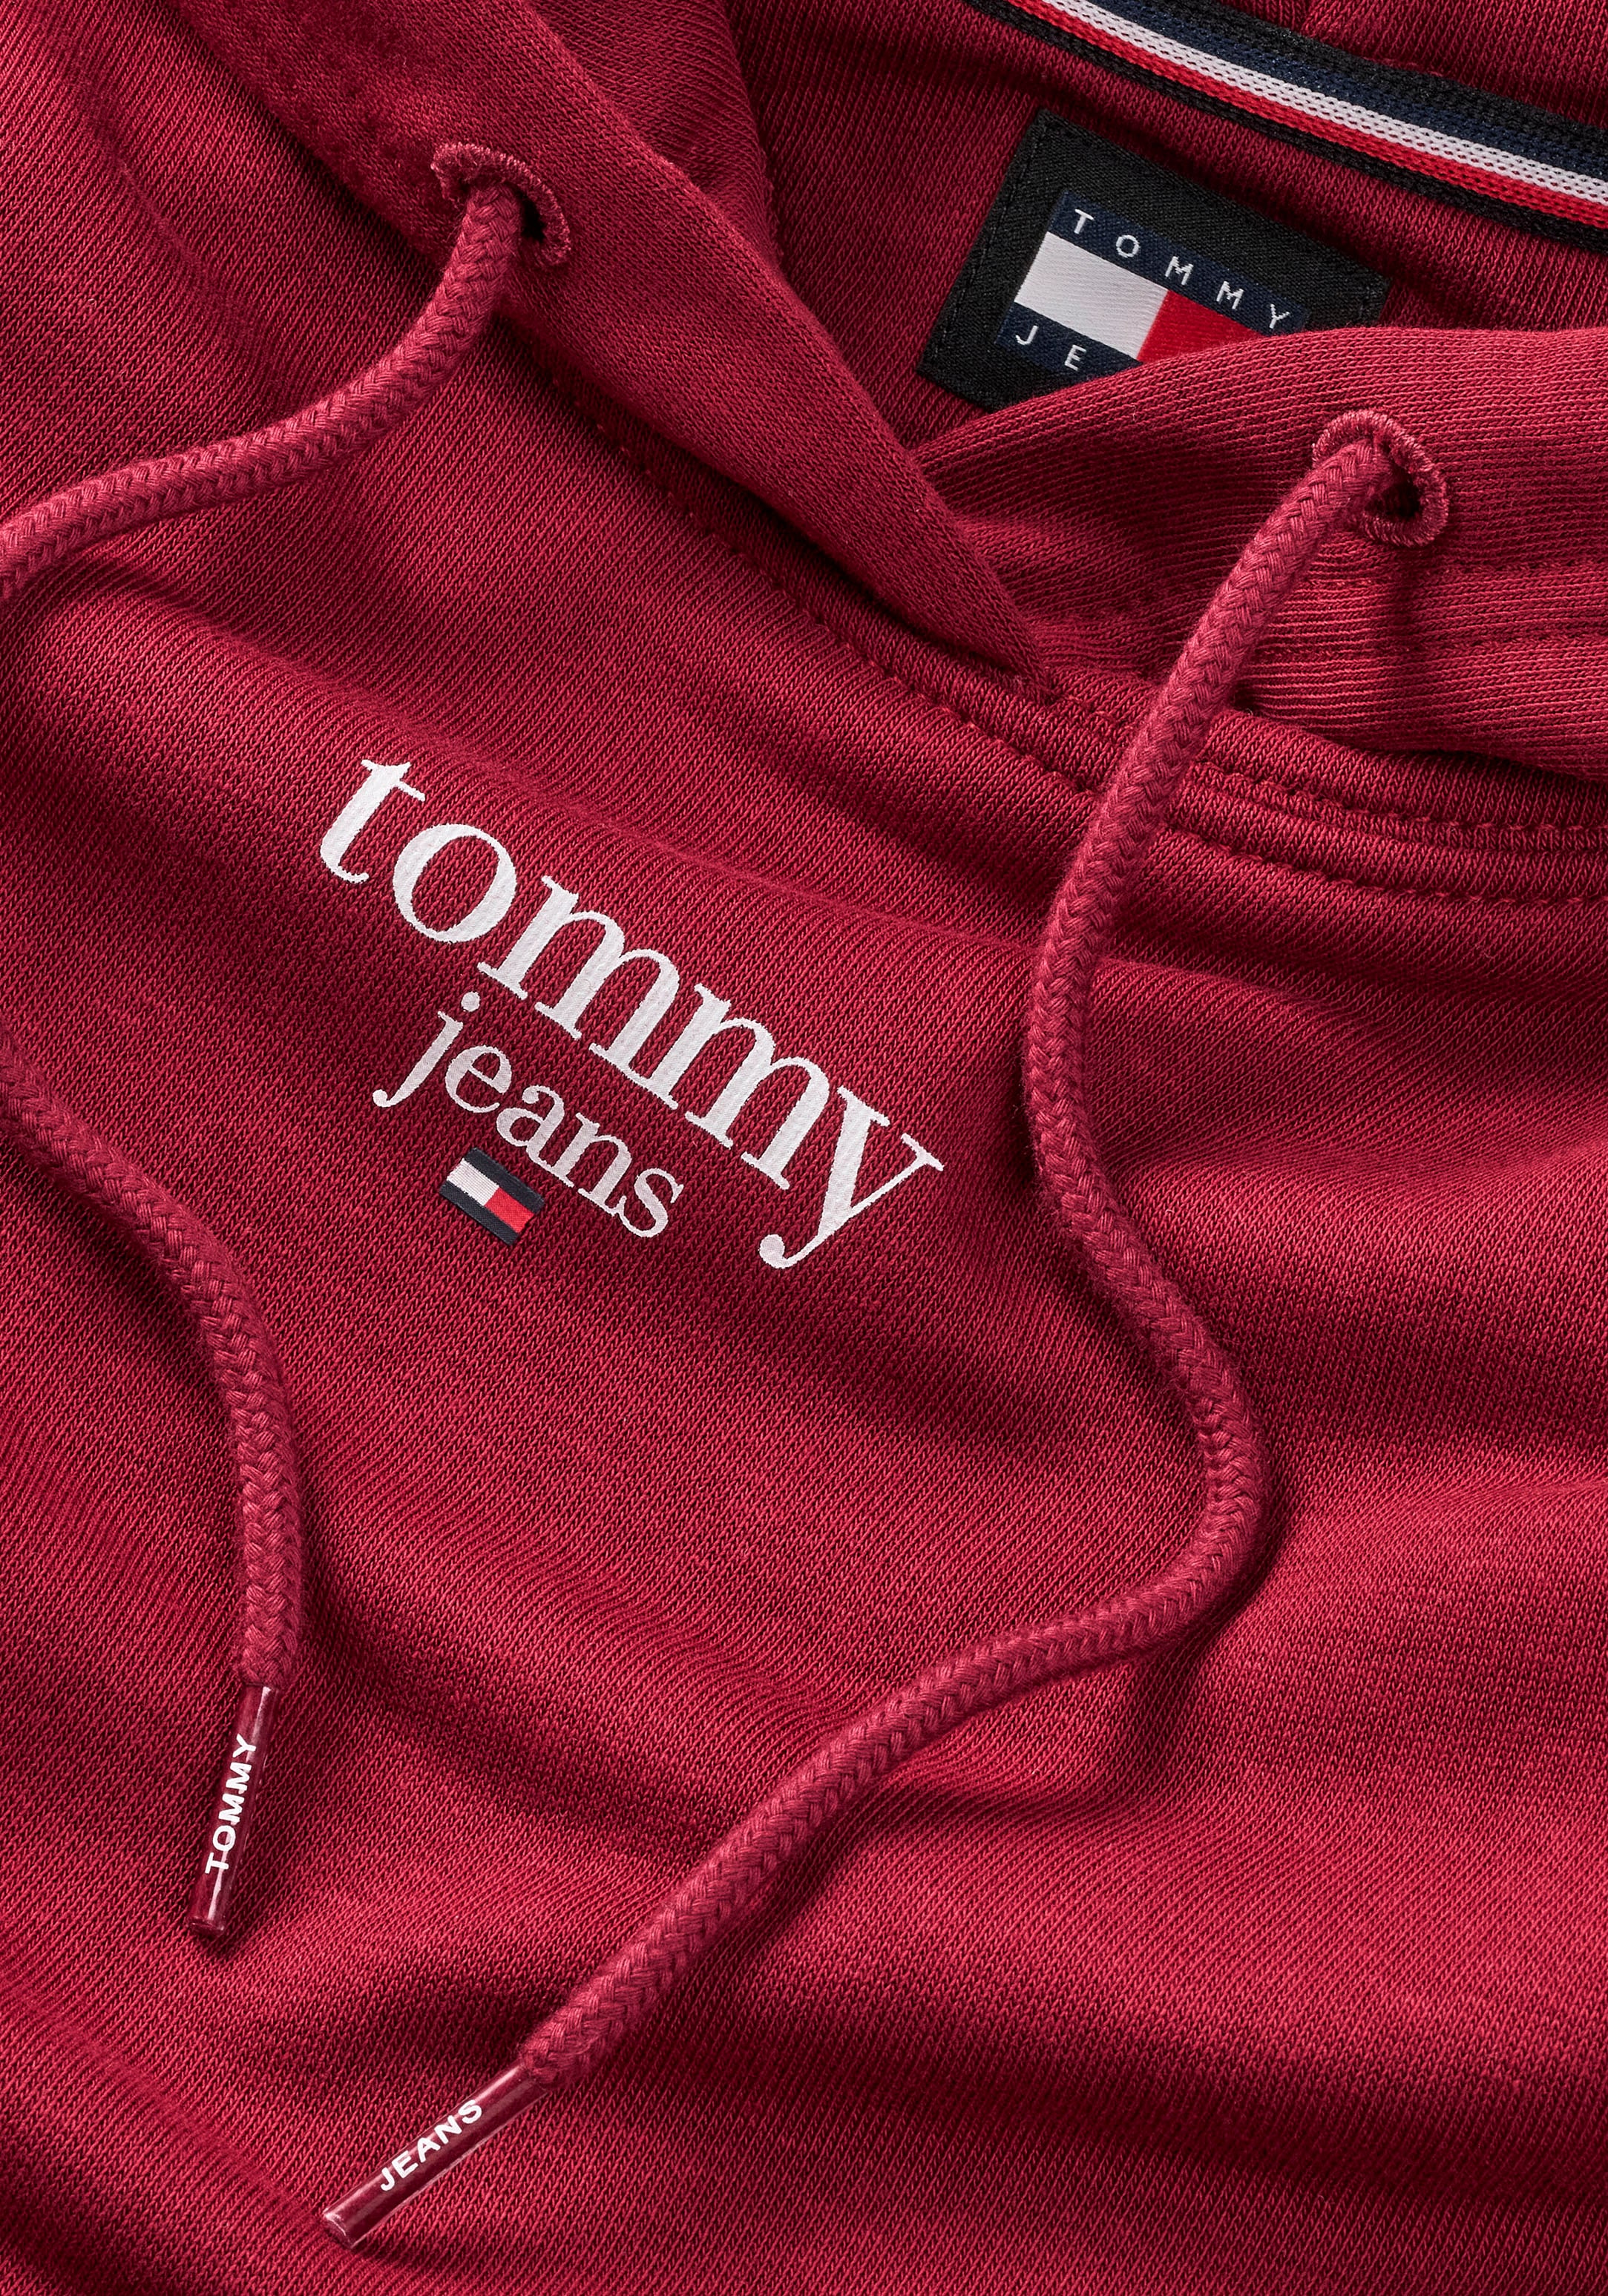 Tommy Jeans Kapuzensweatshirt »TJW ESSENTIAL LOGO 1 HOODIE EXT«, mit Kapuze